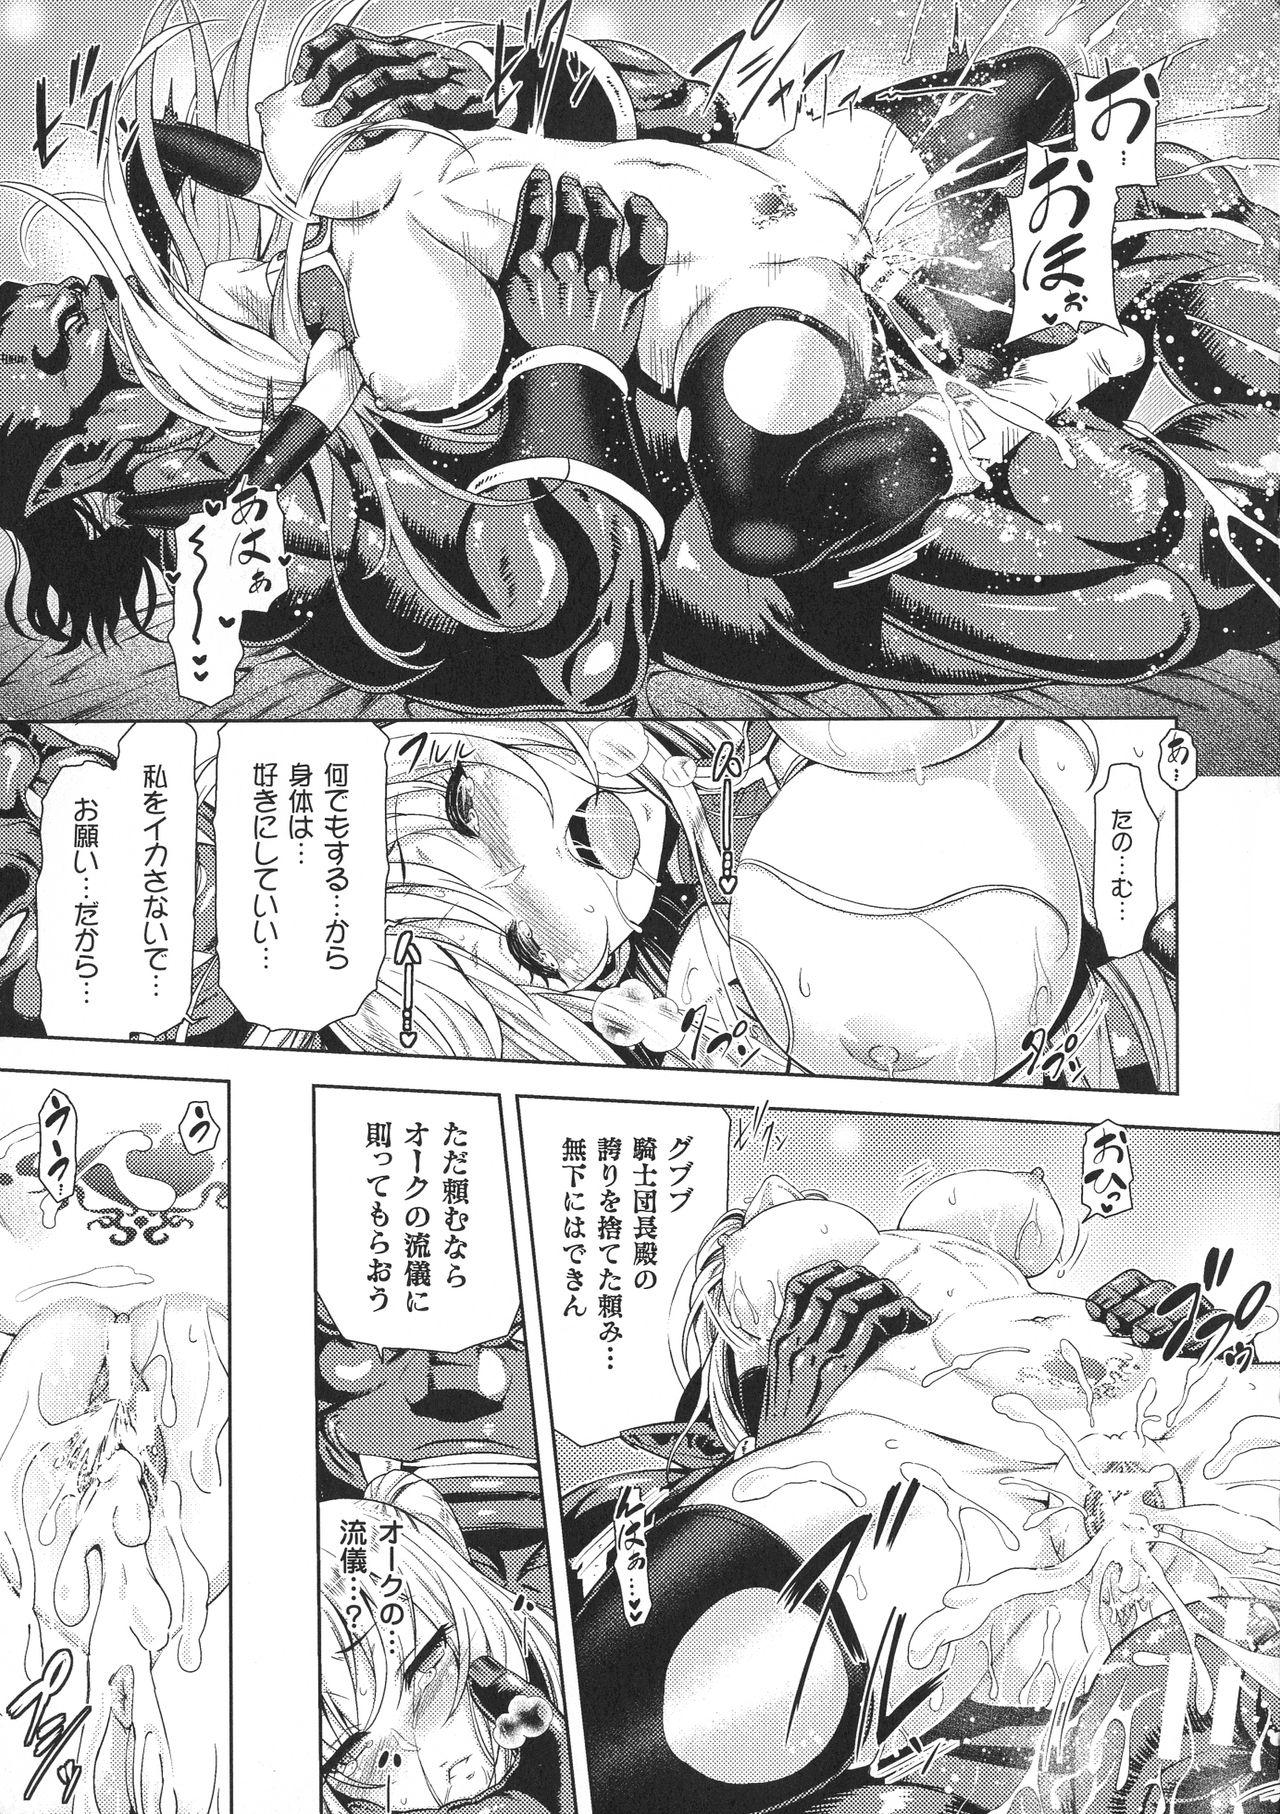 Seigi no Heroine Kangoku File DX Vol. 8 44